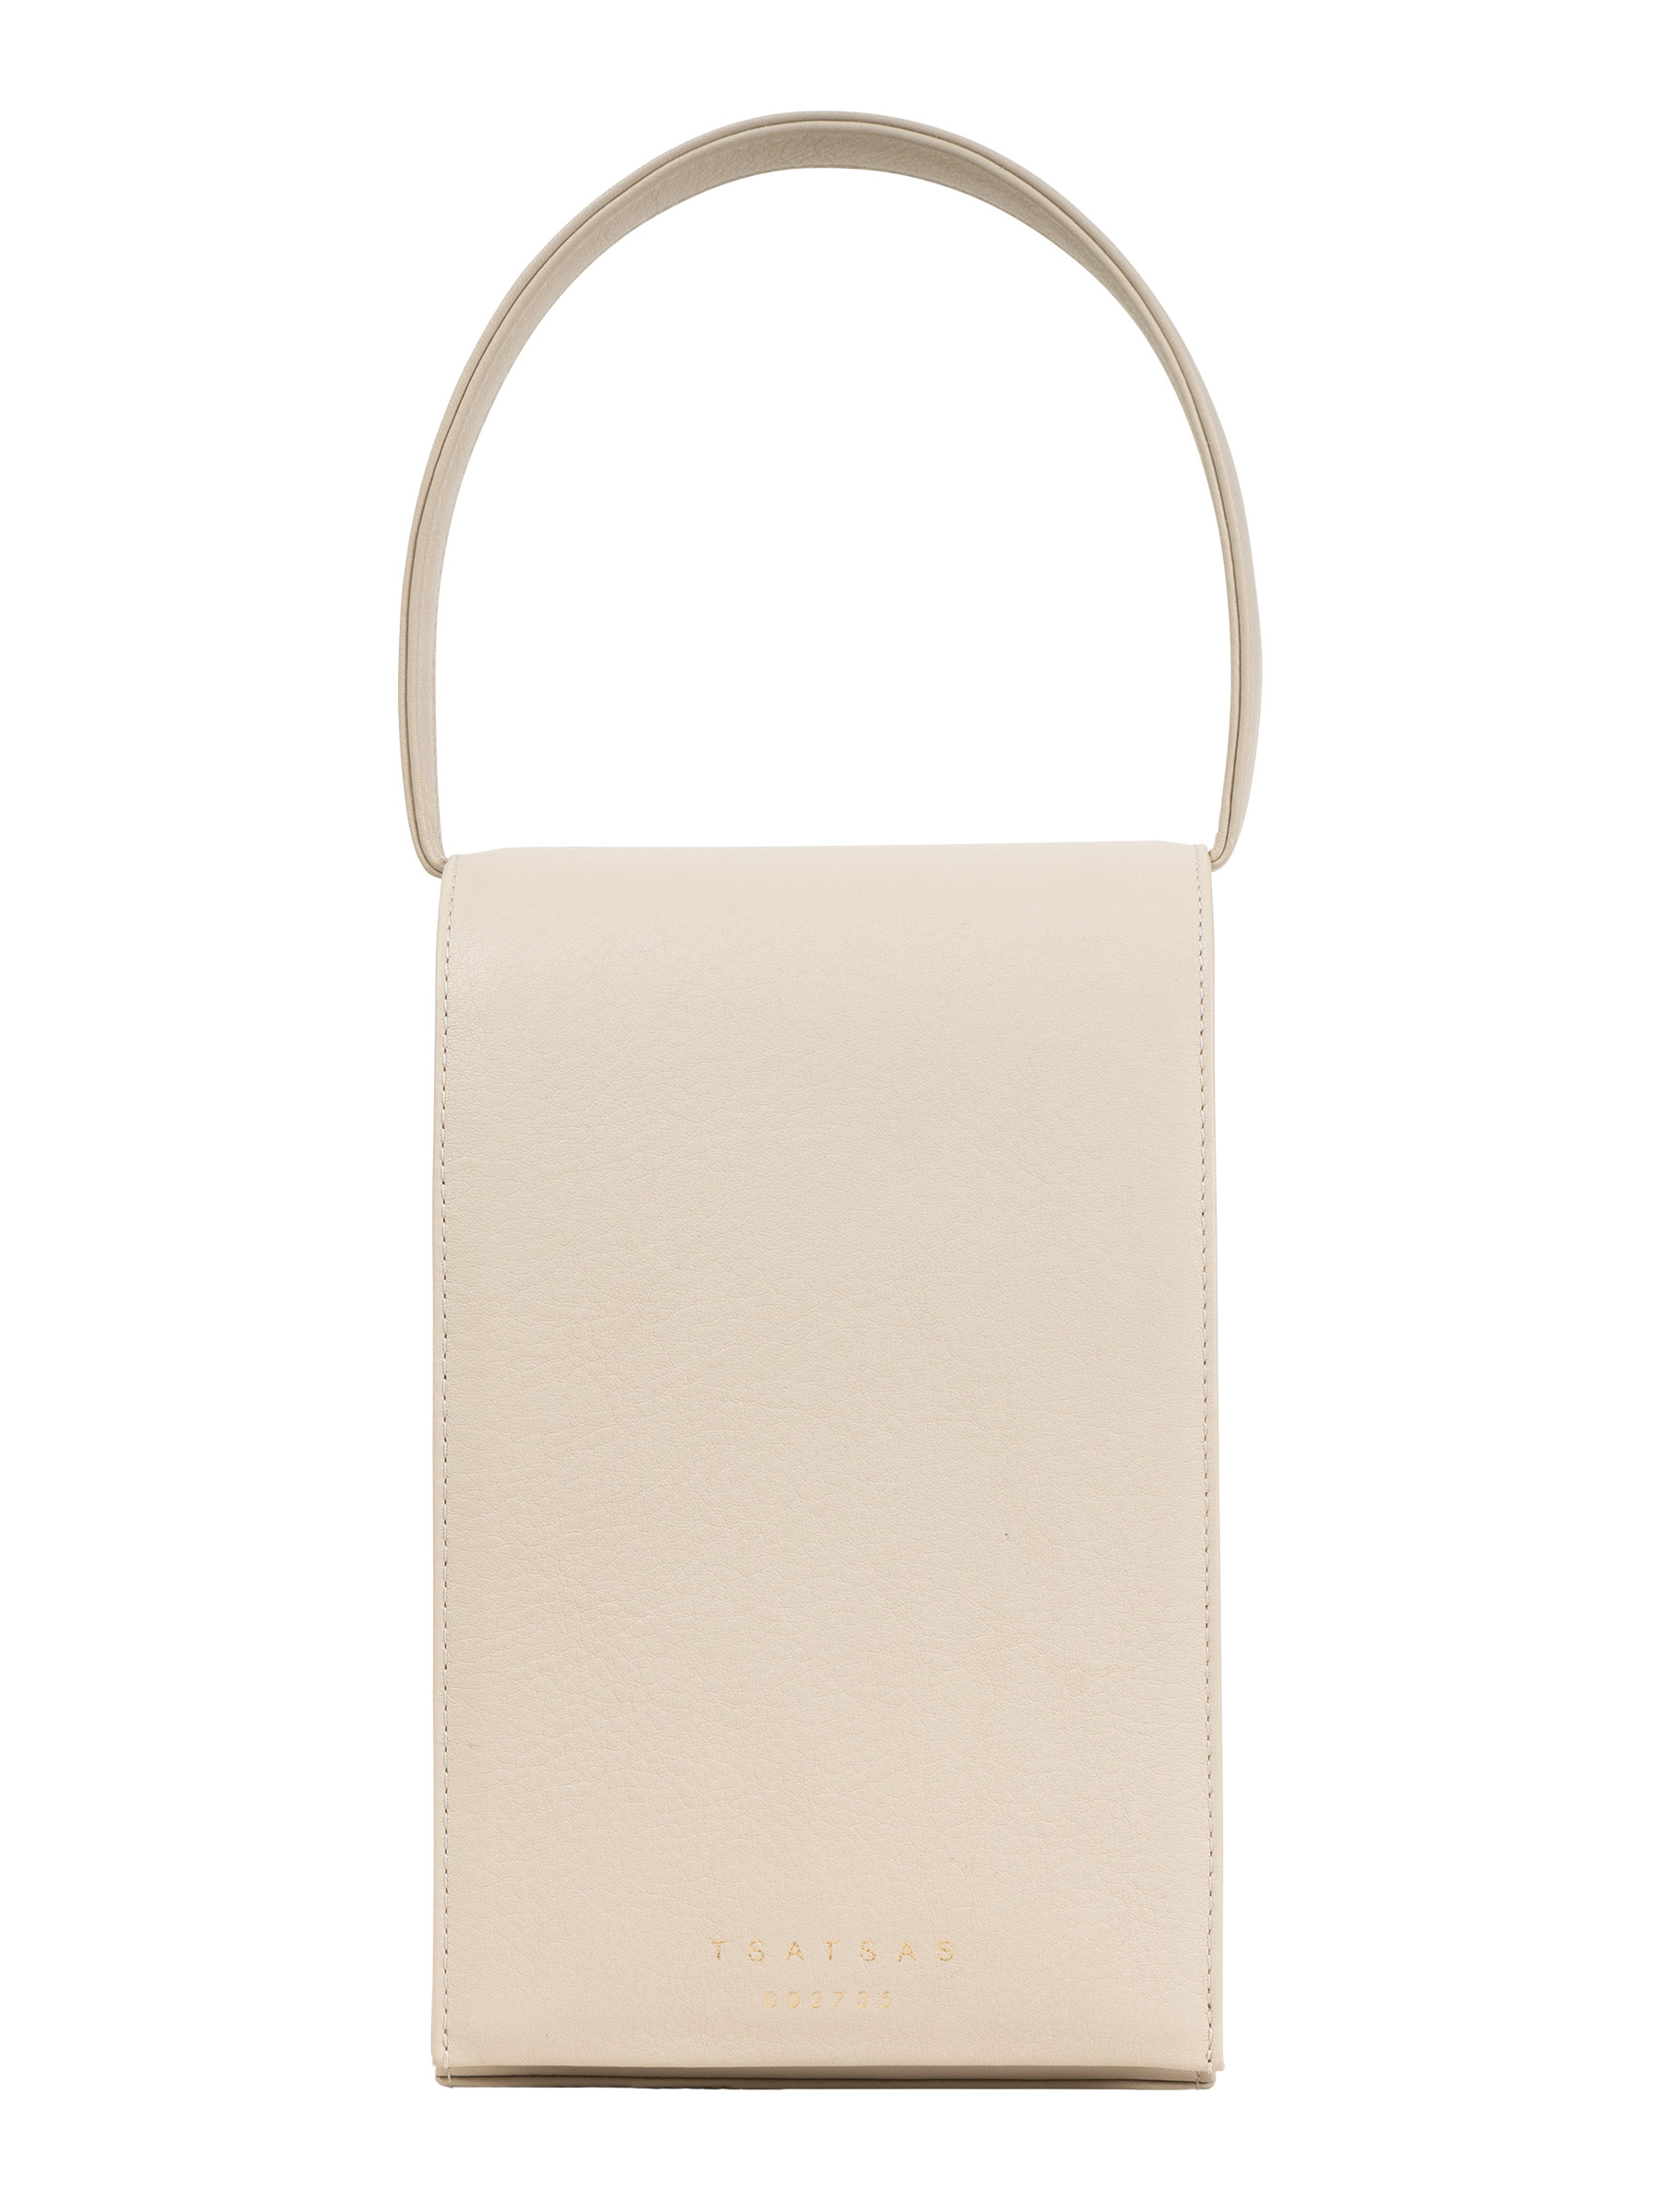 MALVA 3 top handle bag in ivory calfskin leather | TSATSAS